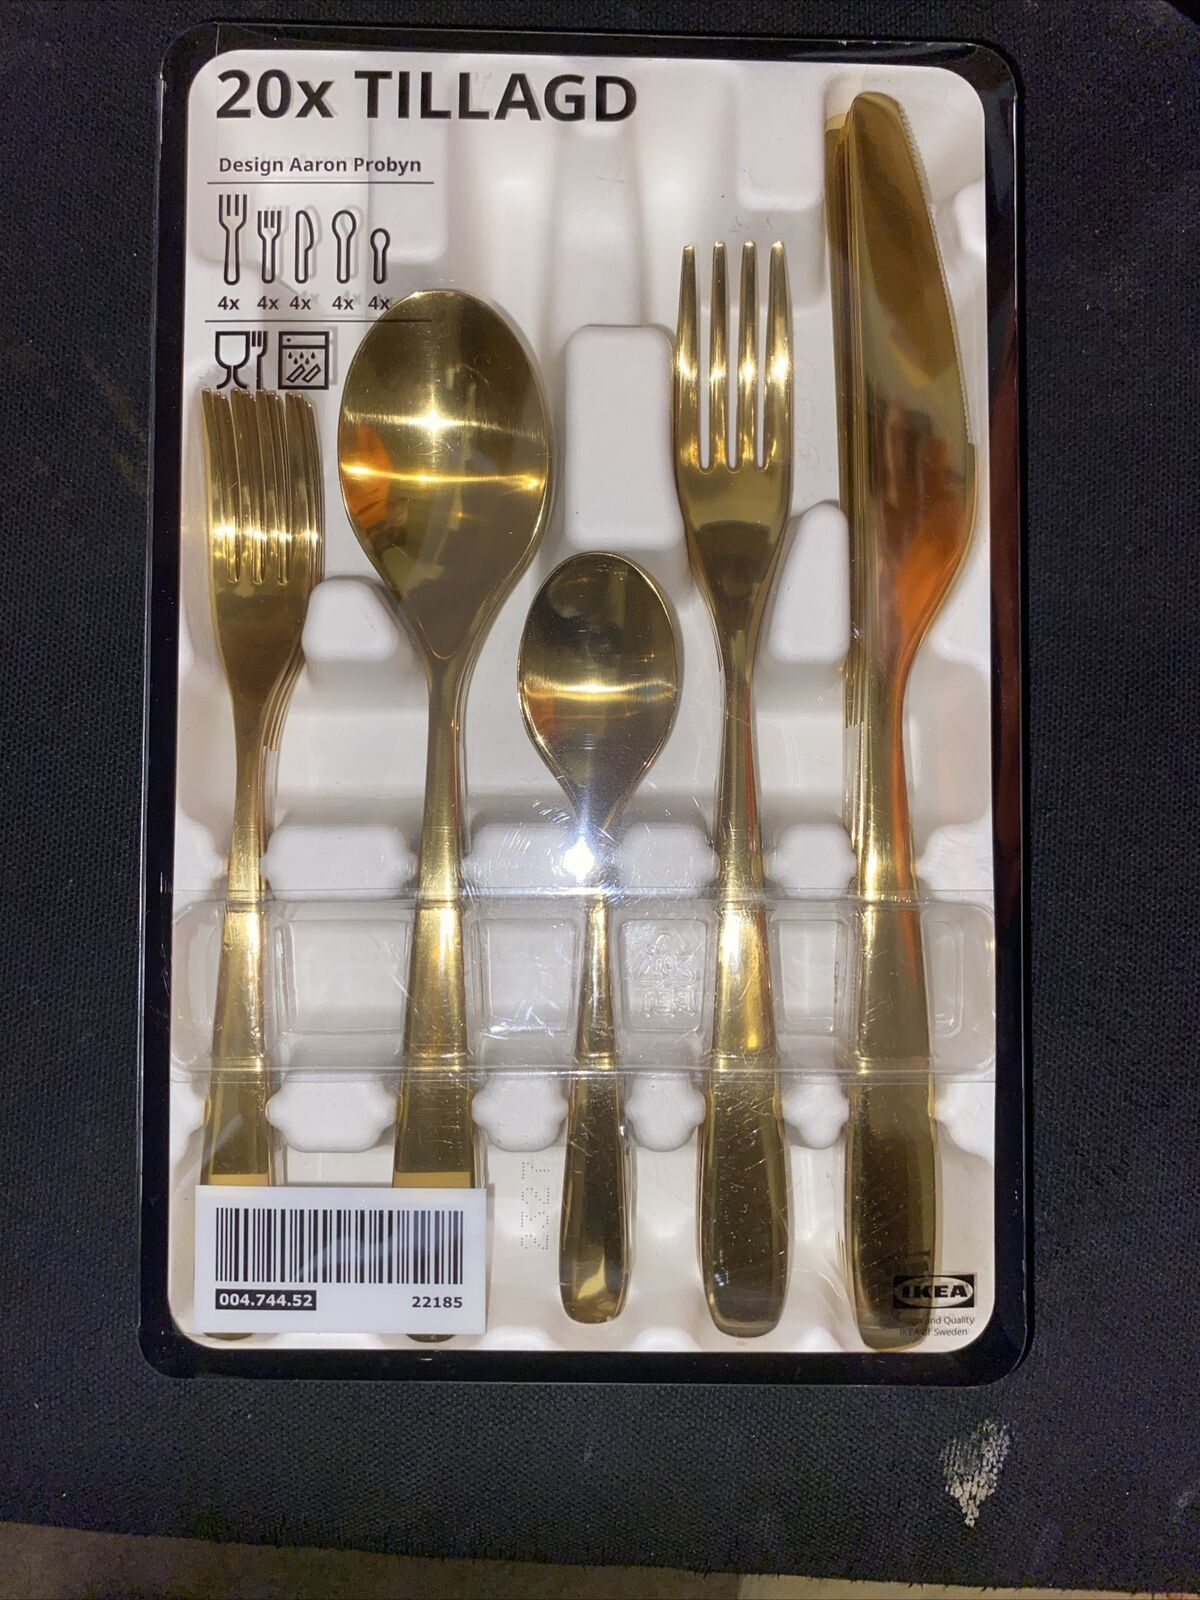 IKEA 20 x Tillagd Cutlery Set - GOLD - AS IS